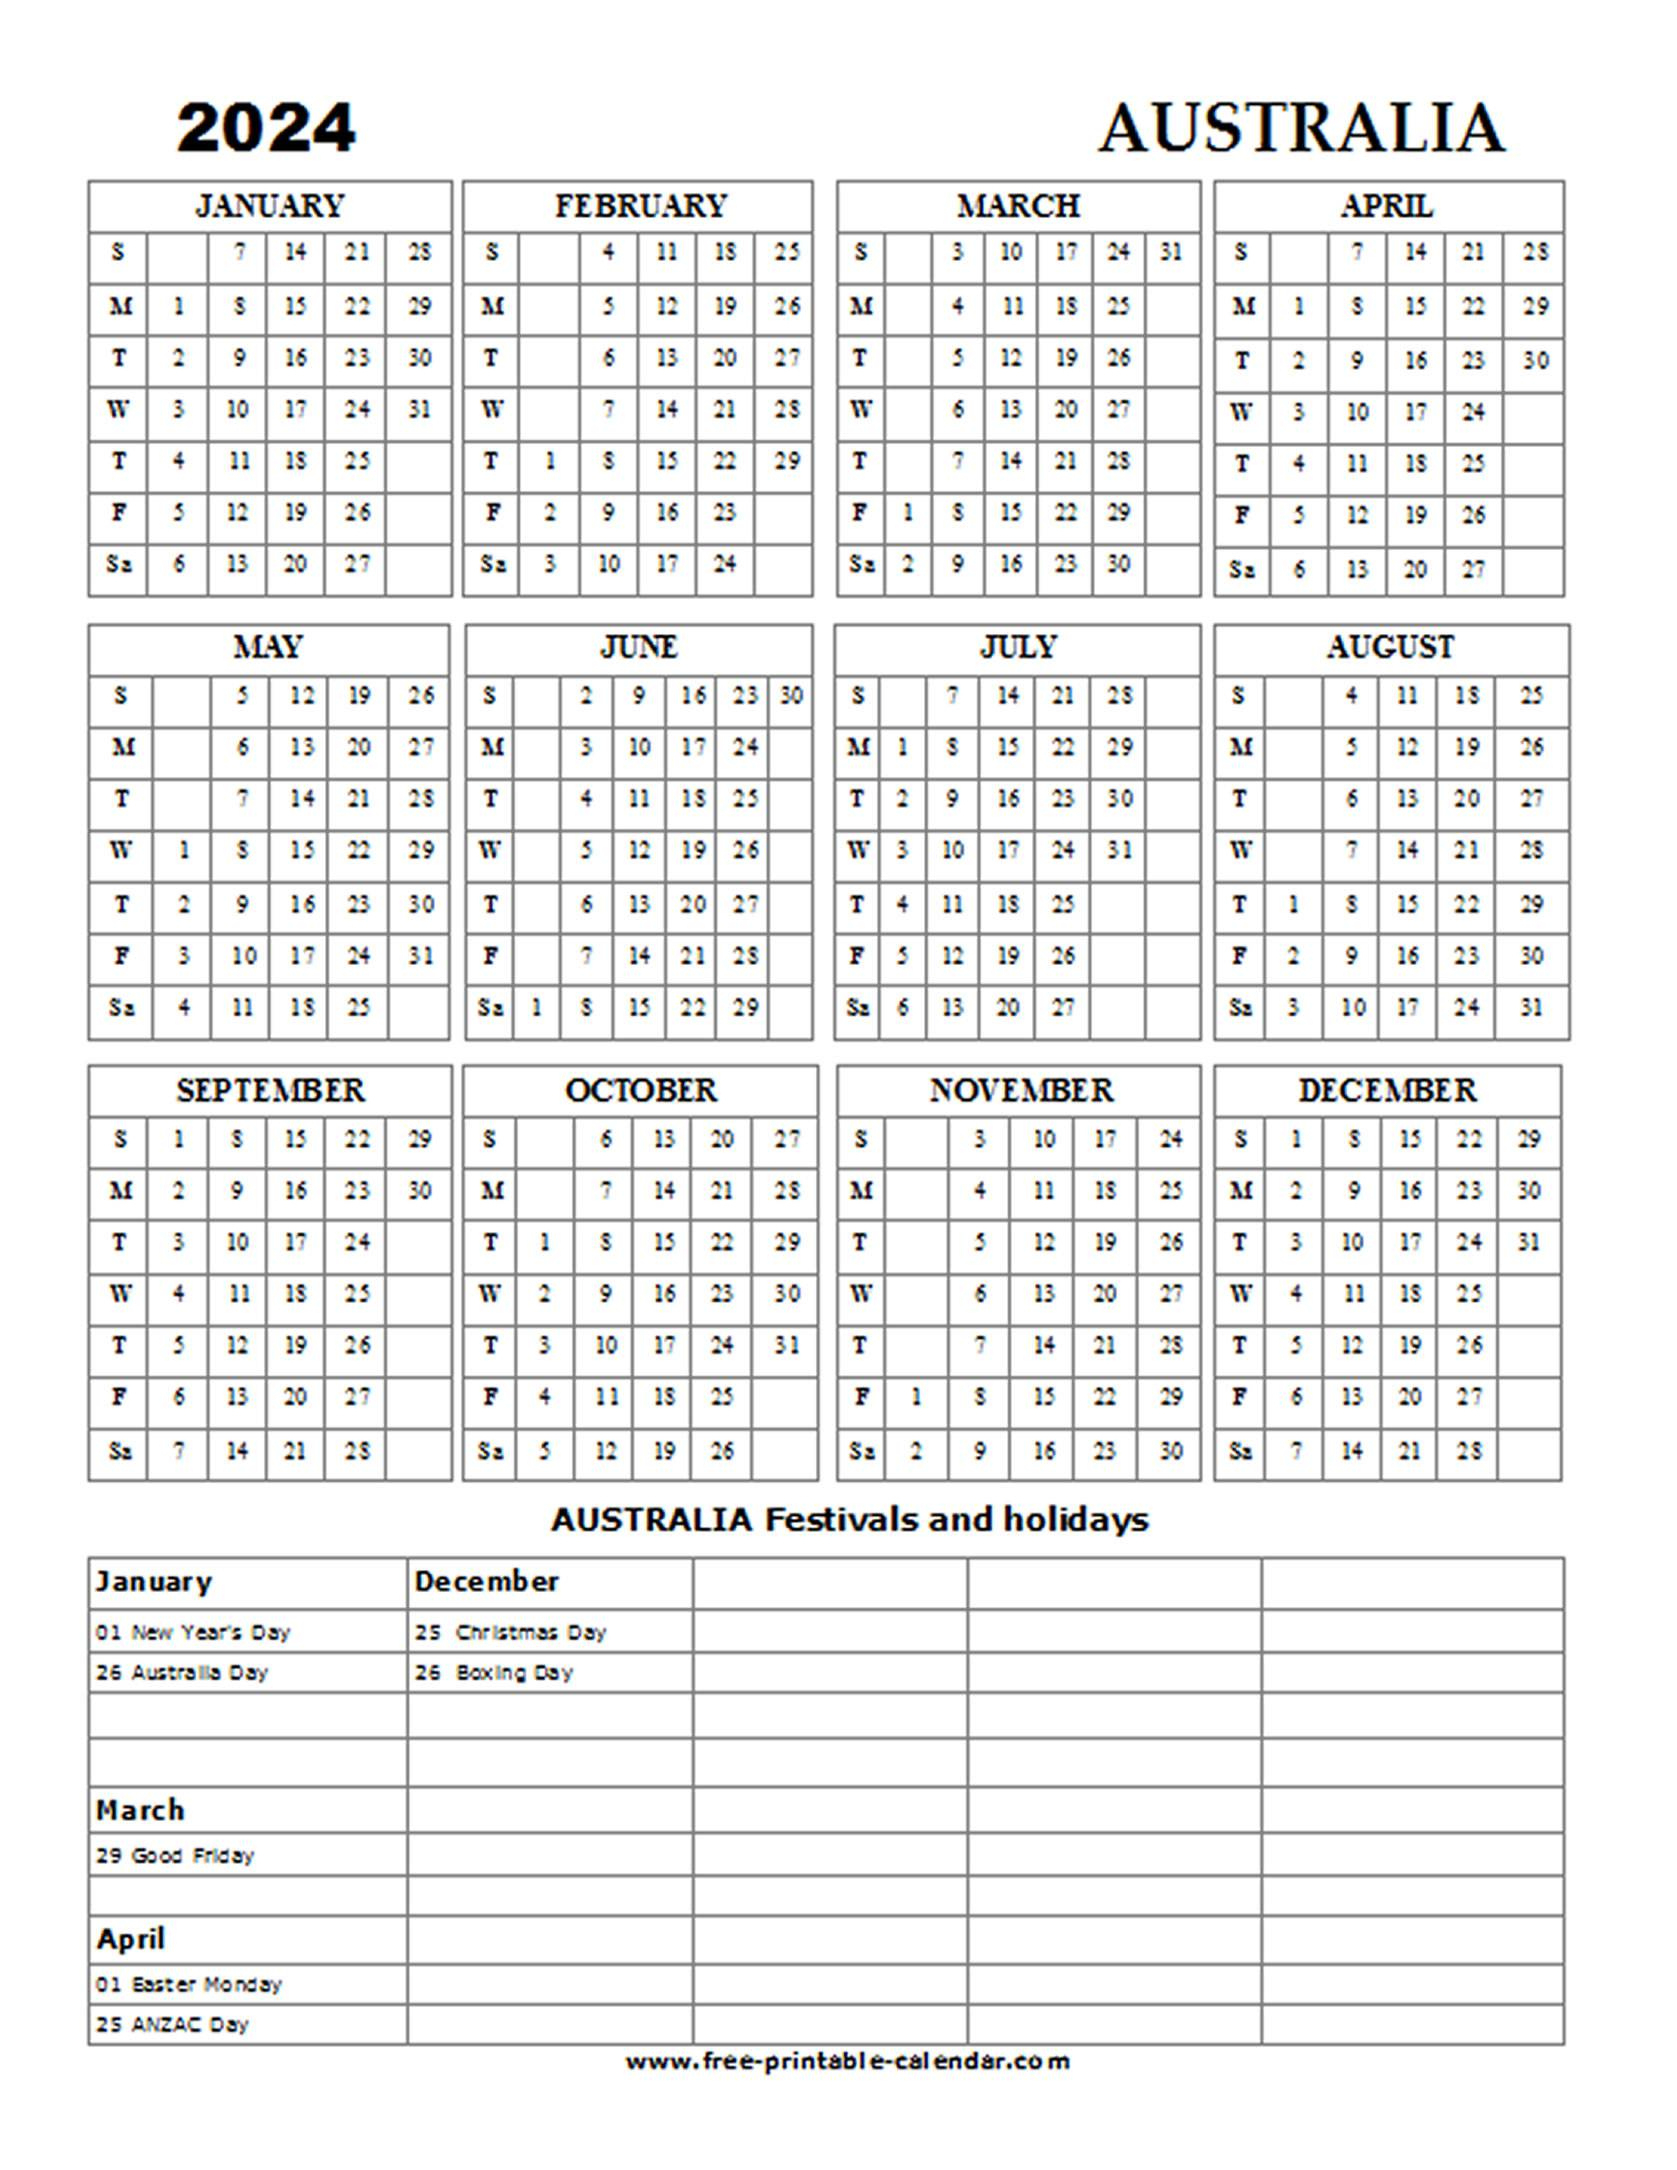 2024 Australia Holiday Calendar - Free-Printable-Calendar | Yearly Calendar 2024 Australia Printable